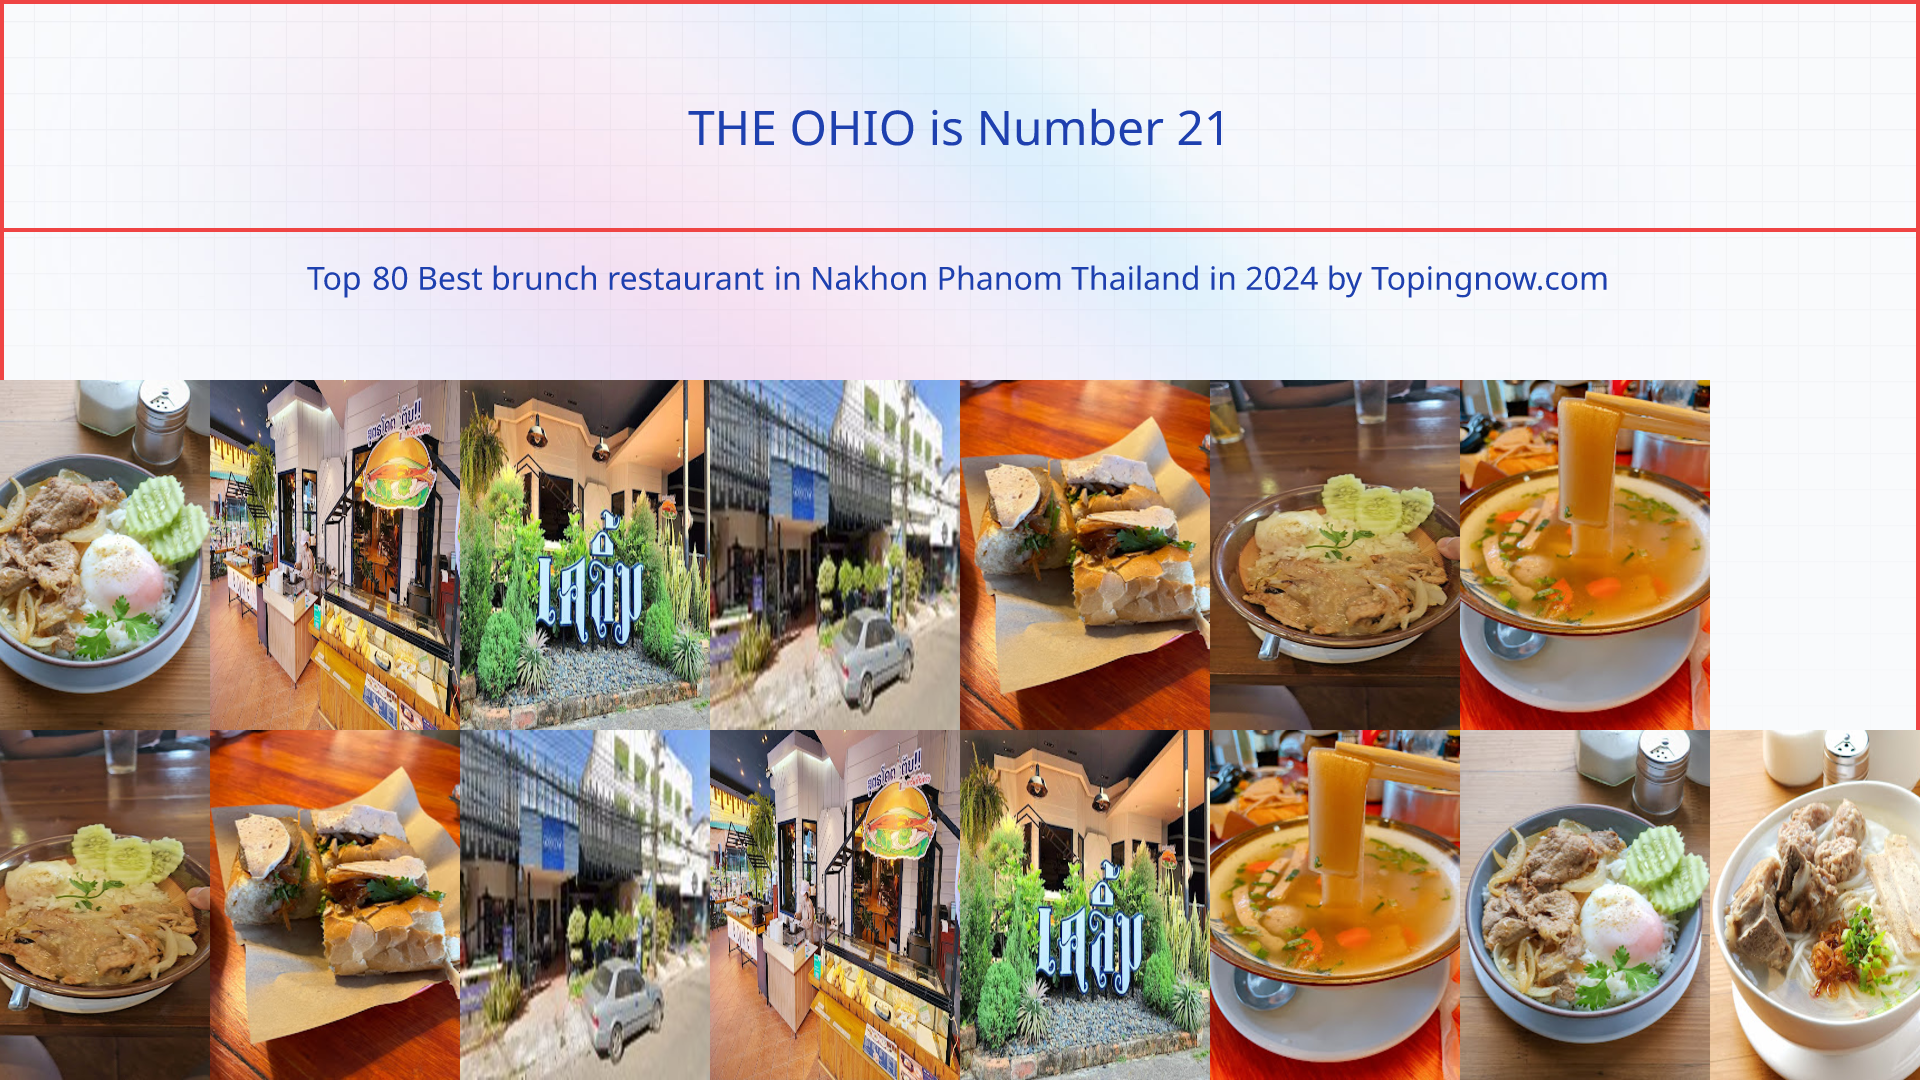 THE OHIO: Top 80 Best brunch restaurant in Nakhon Phanom Thailand in 2024